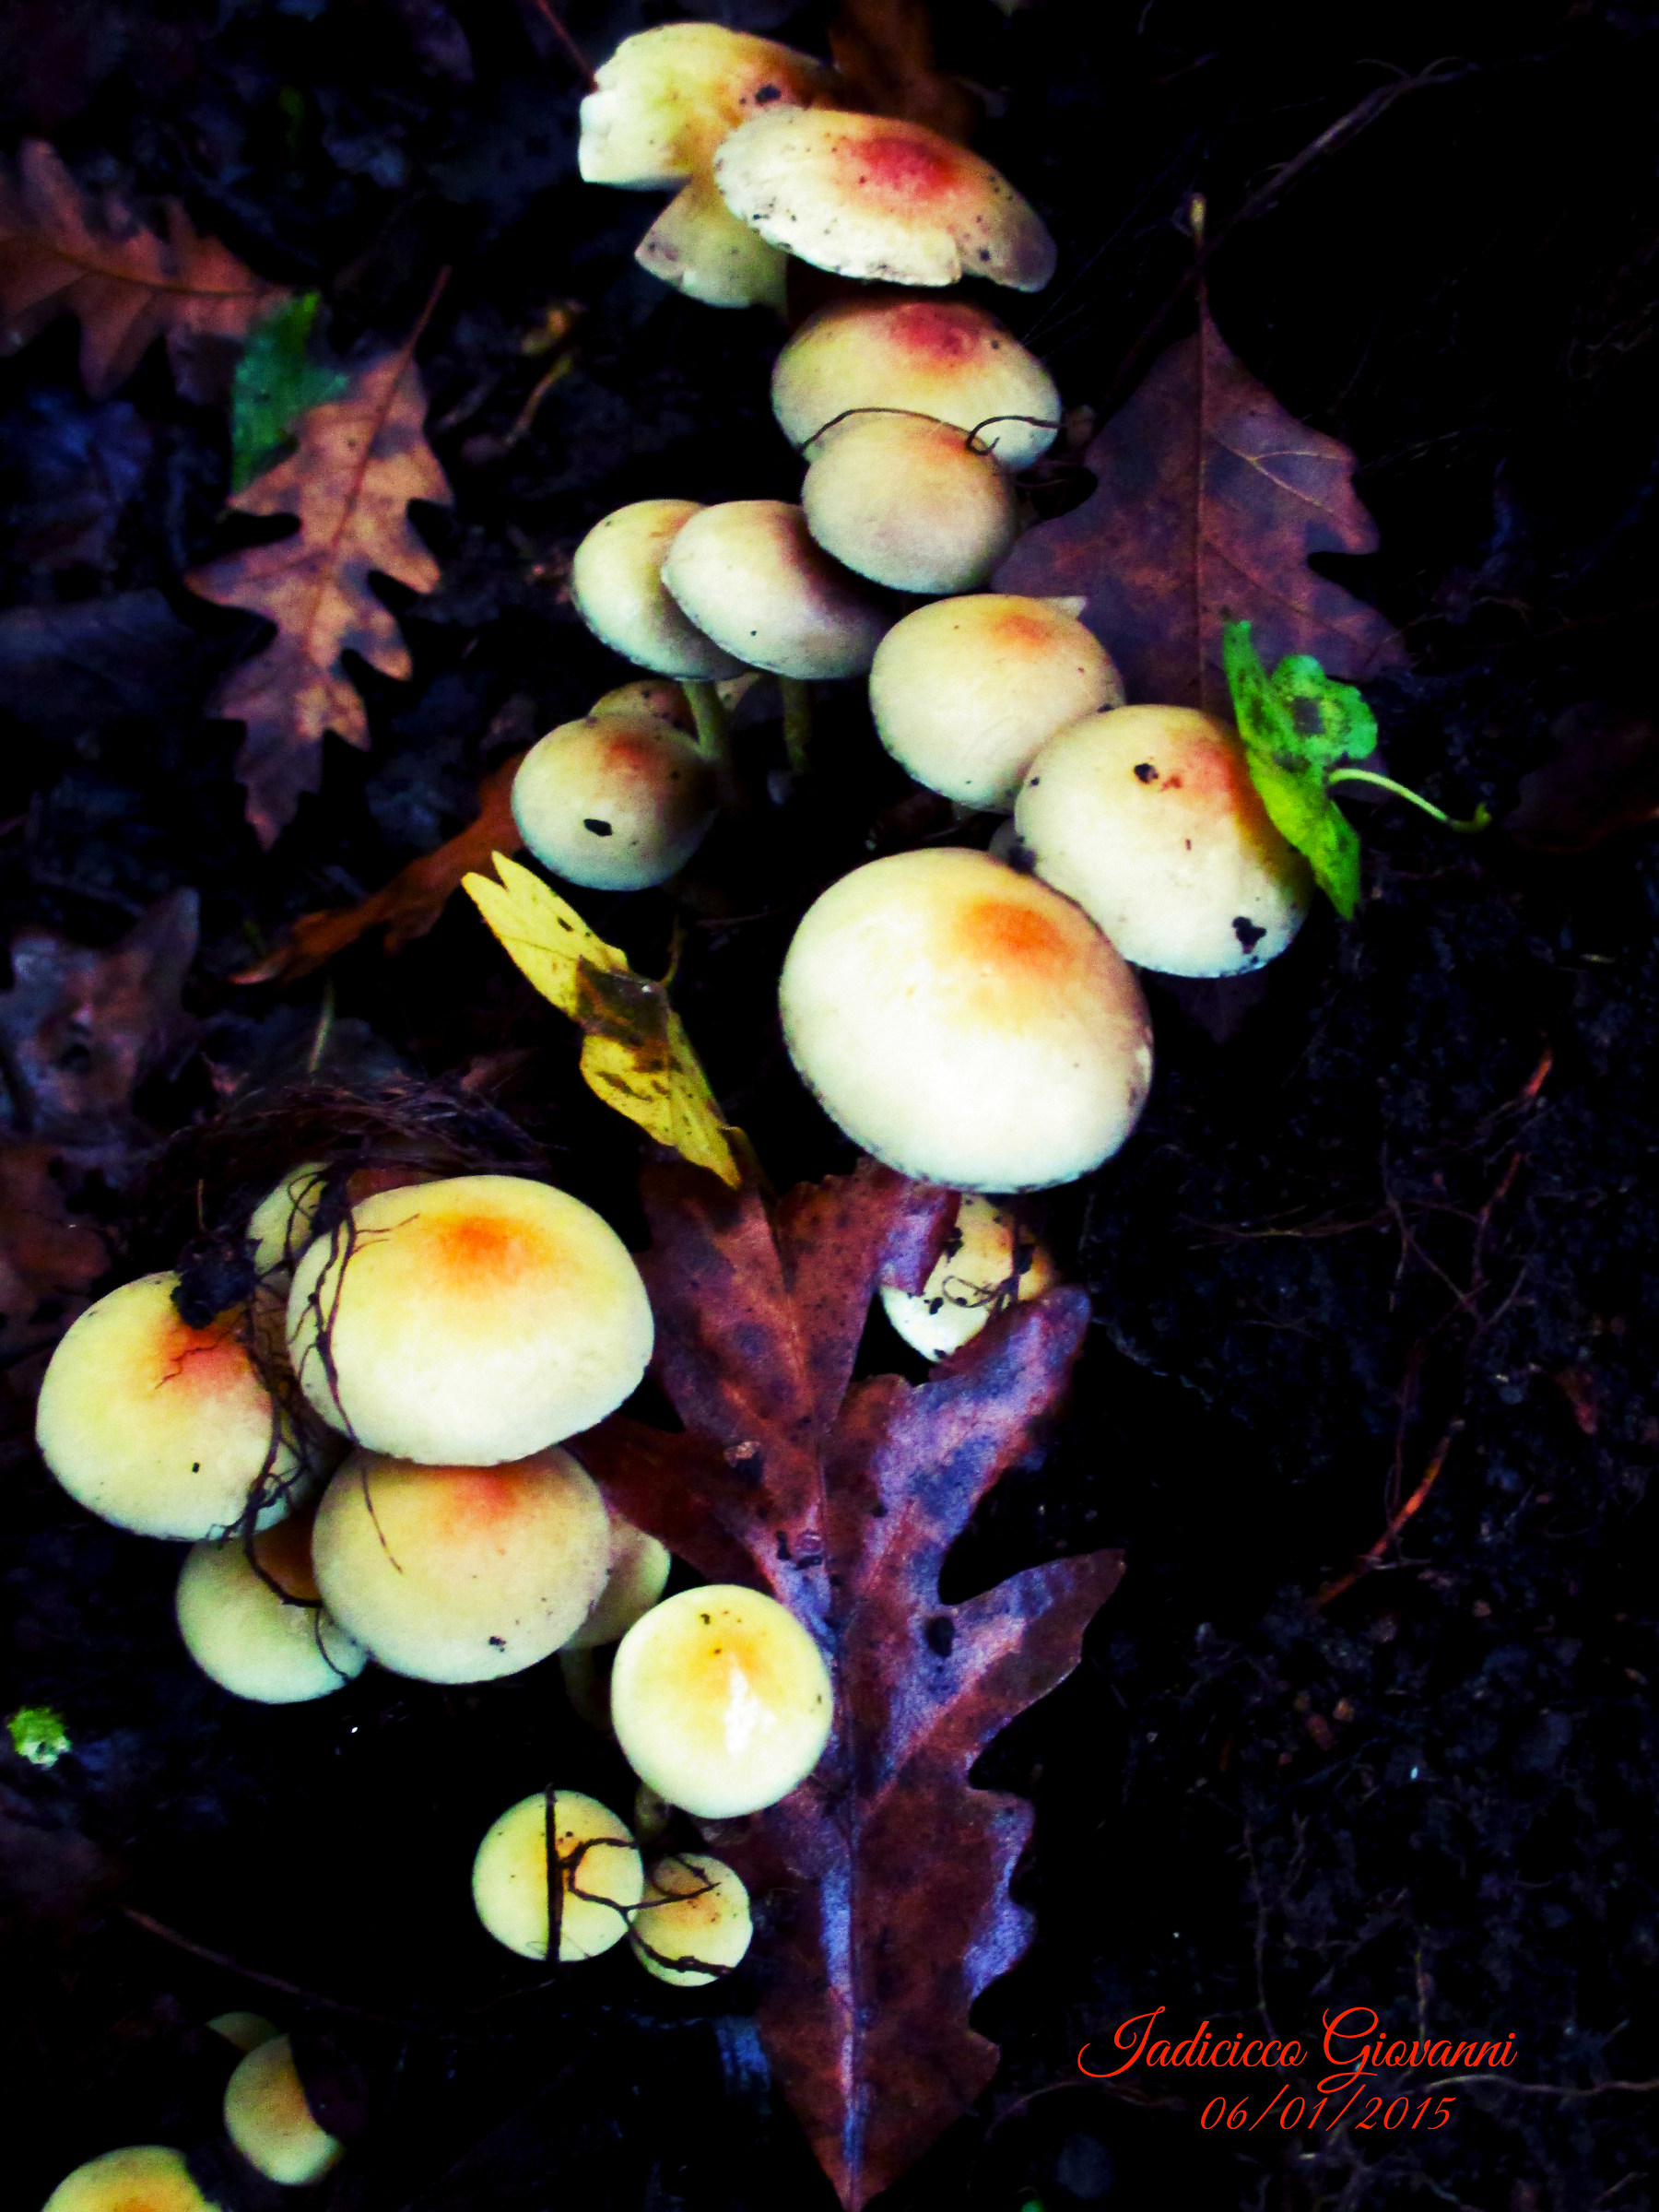 Small family of mushrooms...